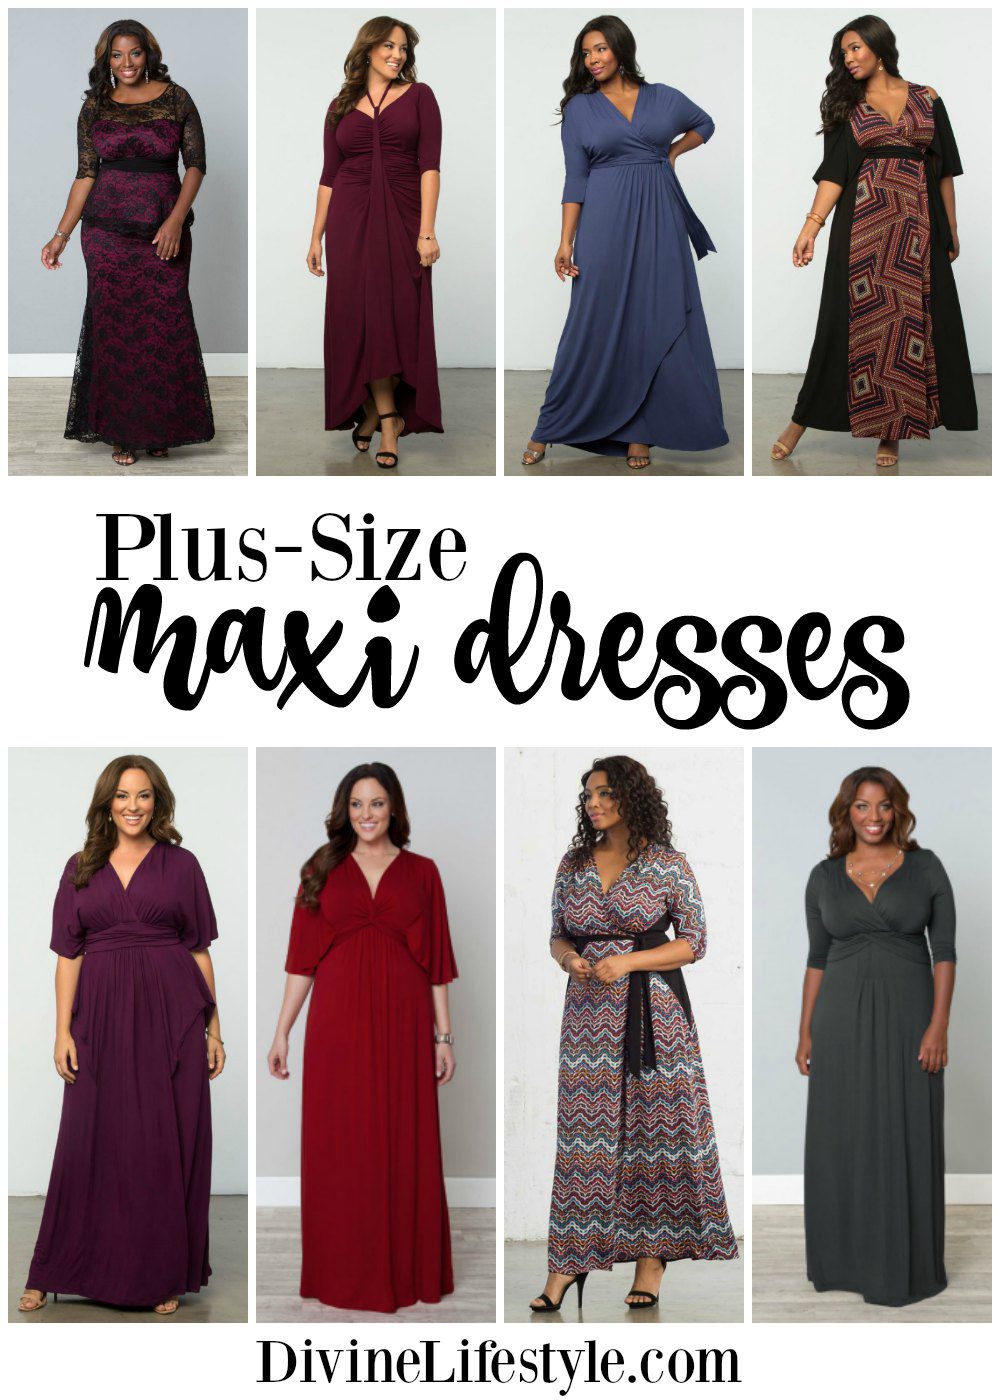 Plus-Size Maxi Dresses